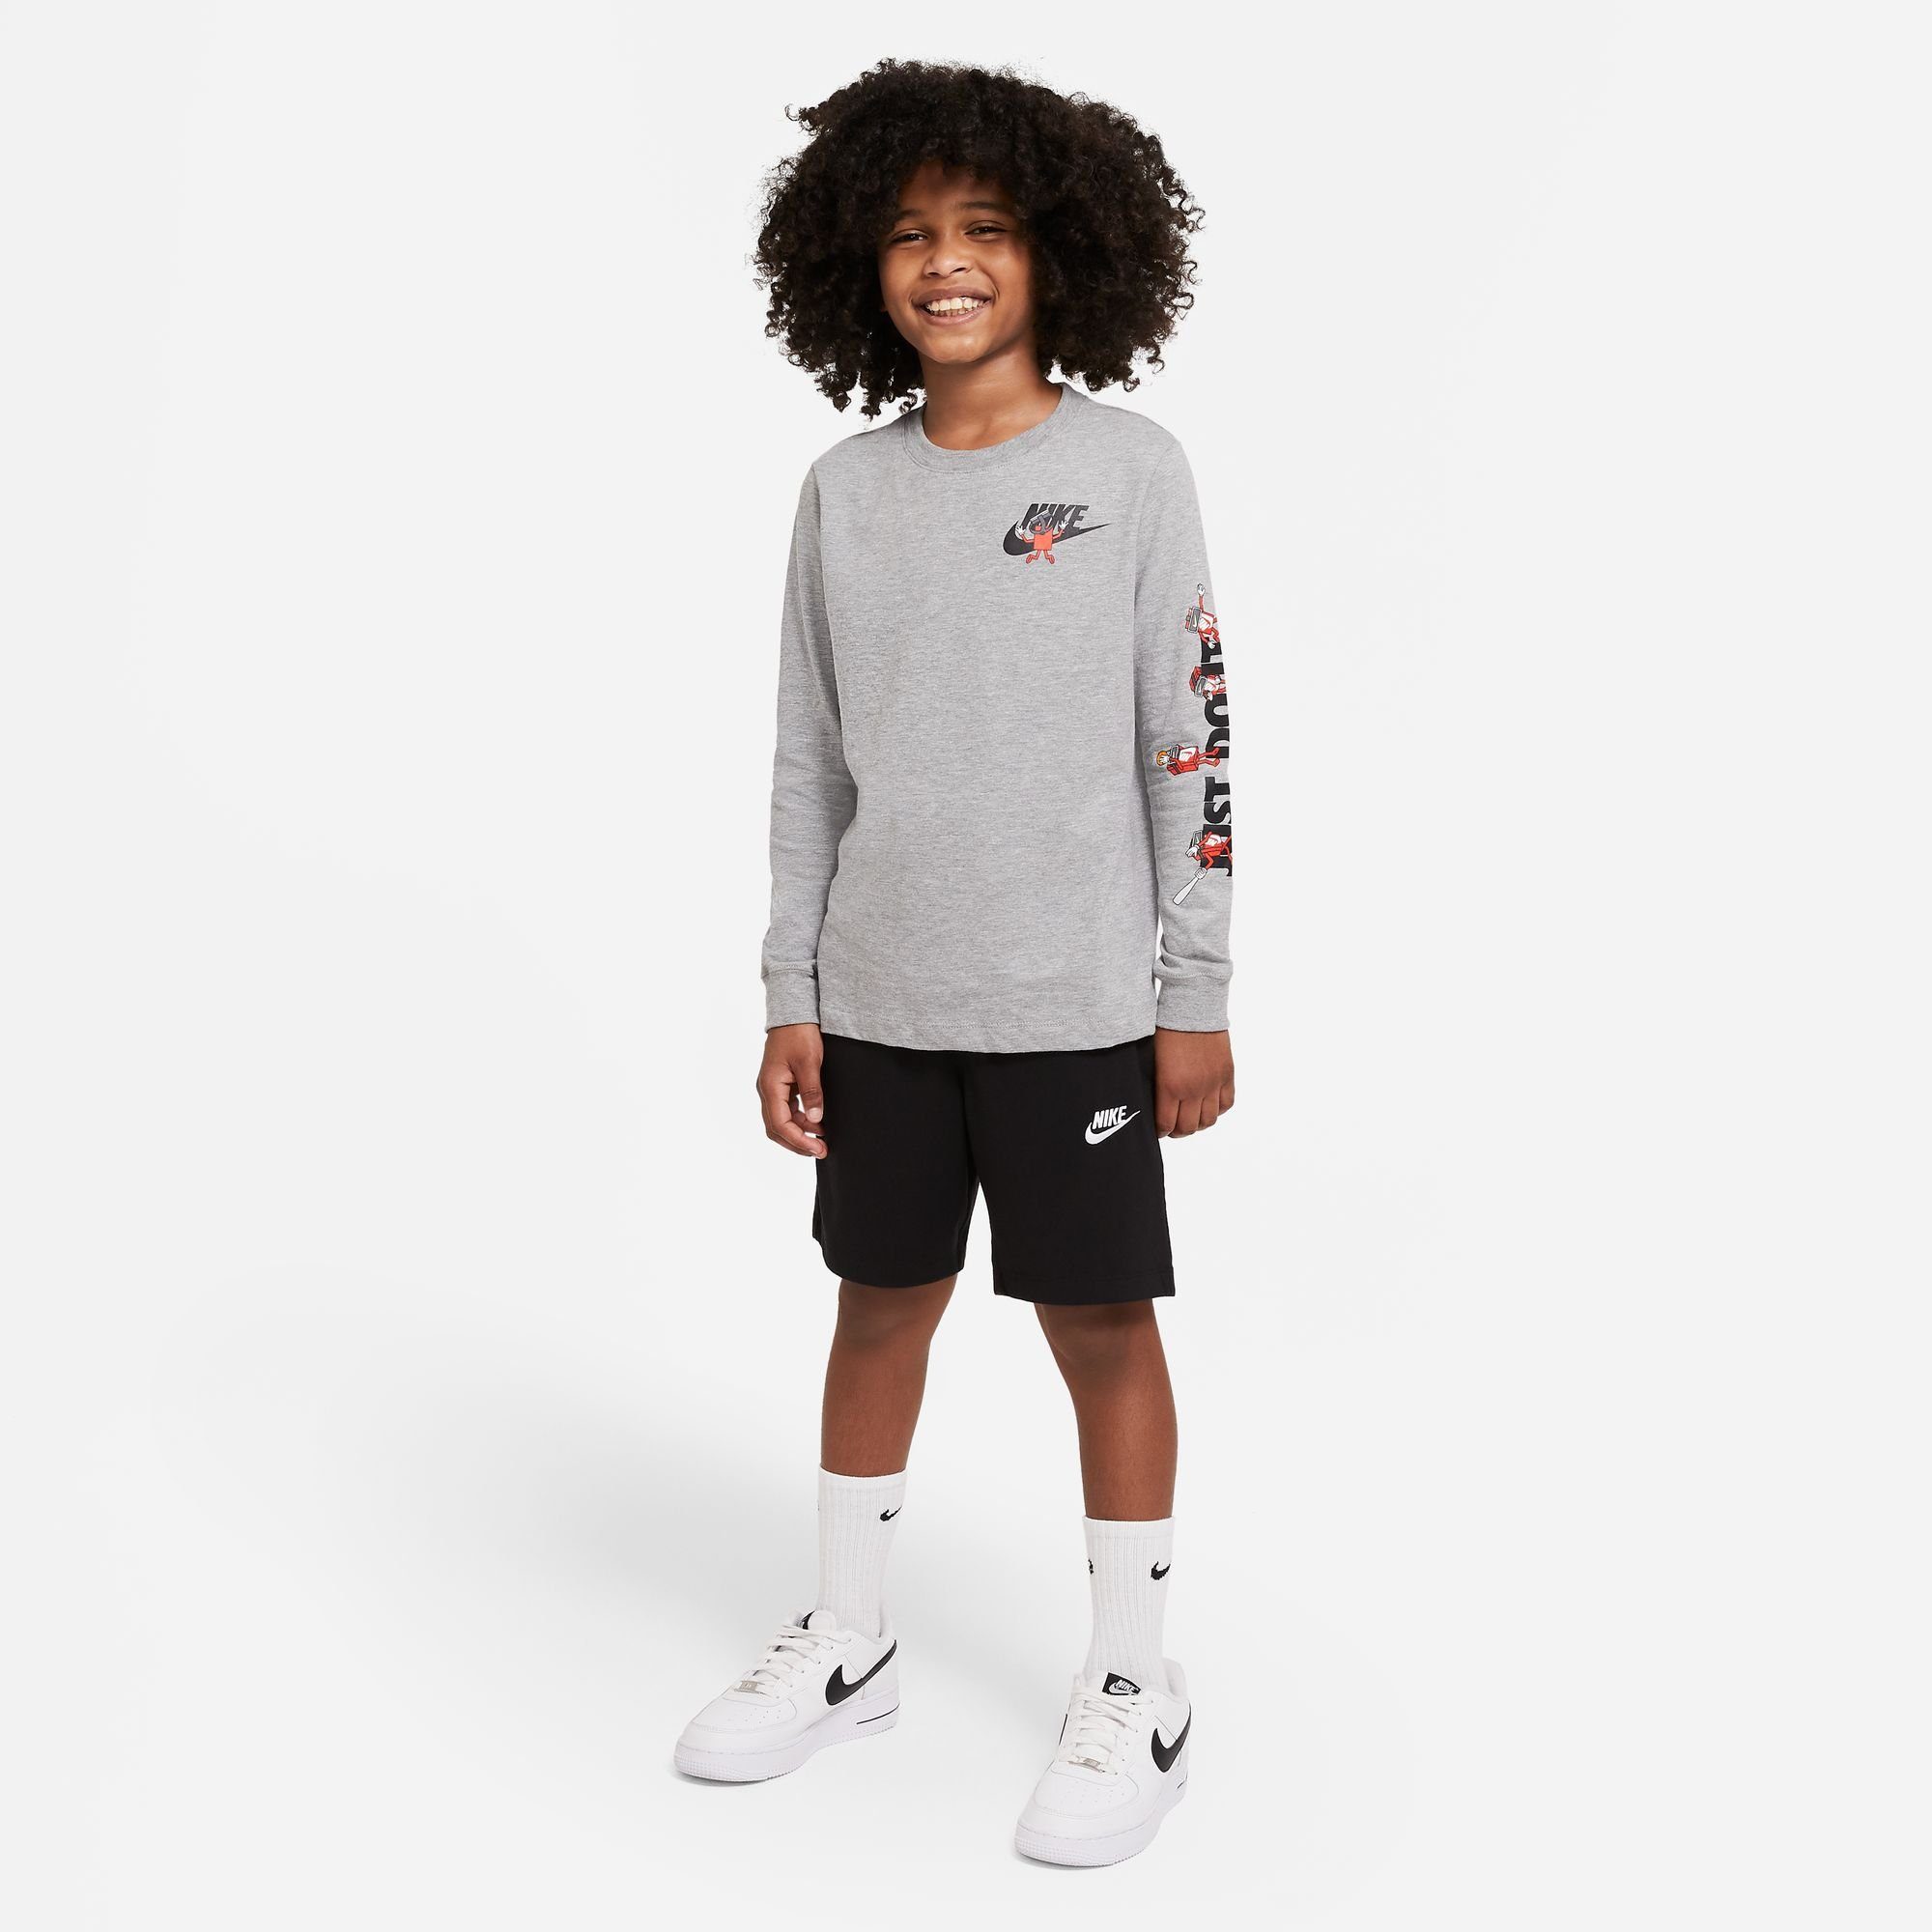 SHORTS KIDS' Shorts JERSEY schwarz (BOYS) Nike Sportswear BIG